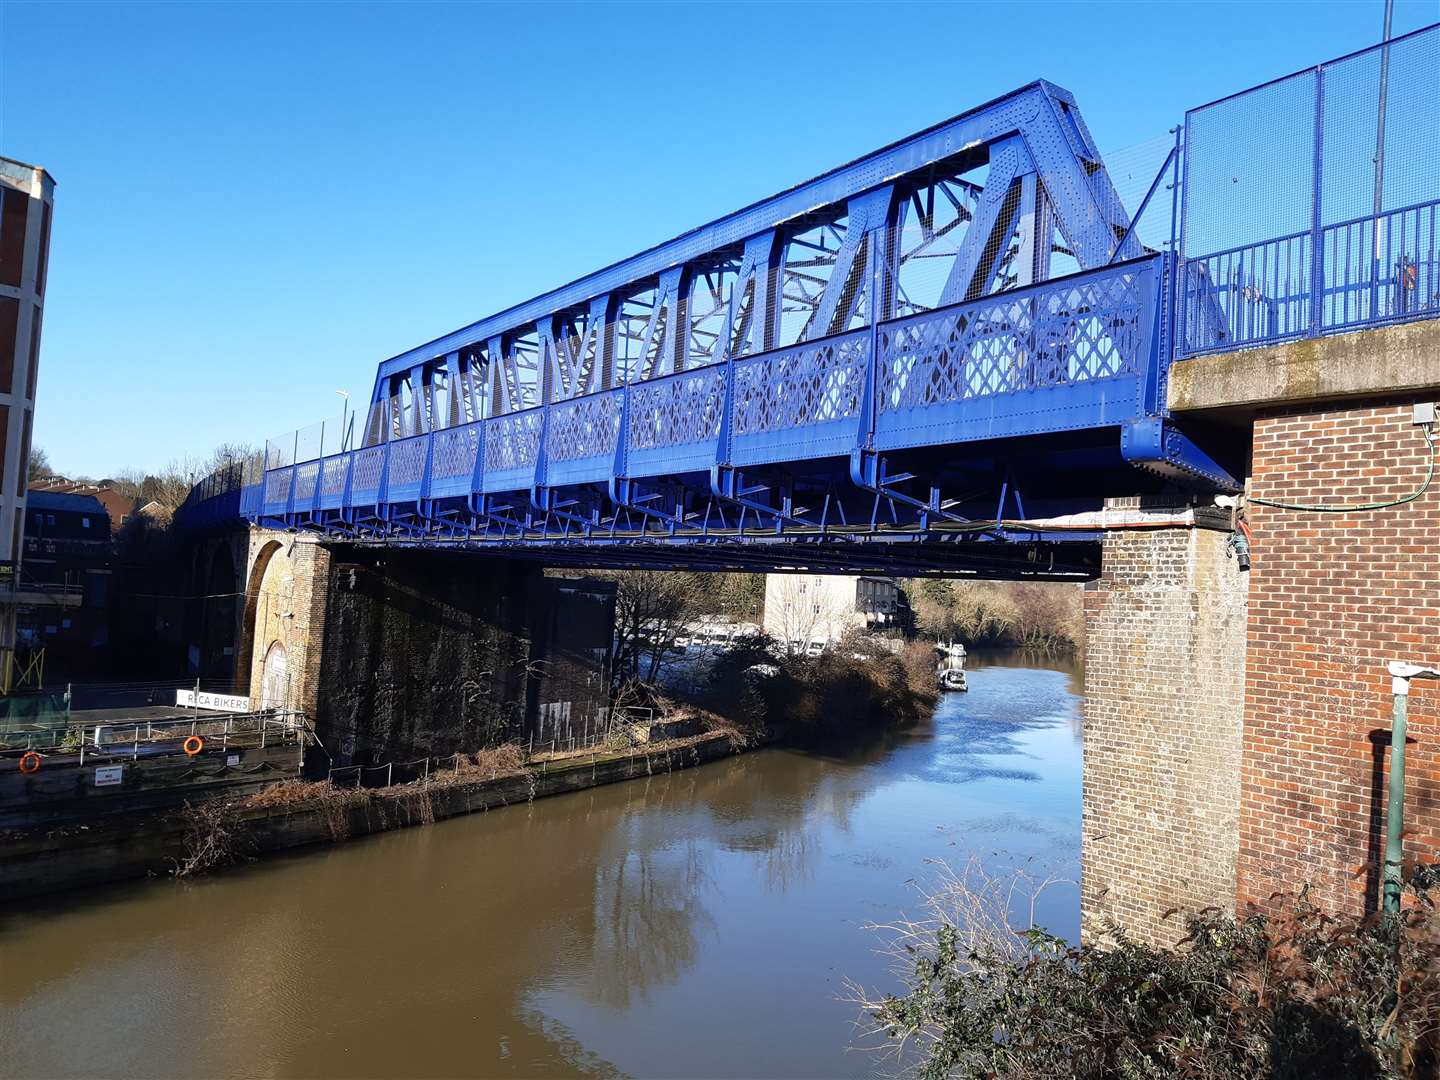 Maidstone's High Level Rail Bridge